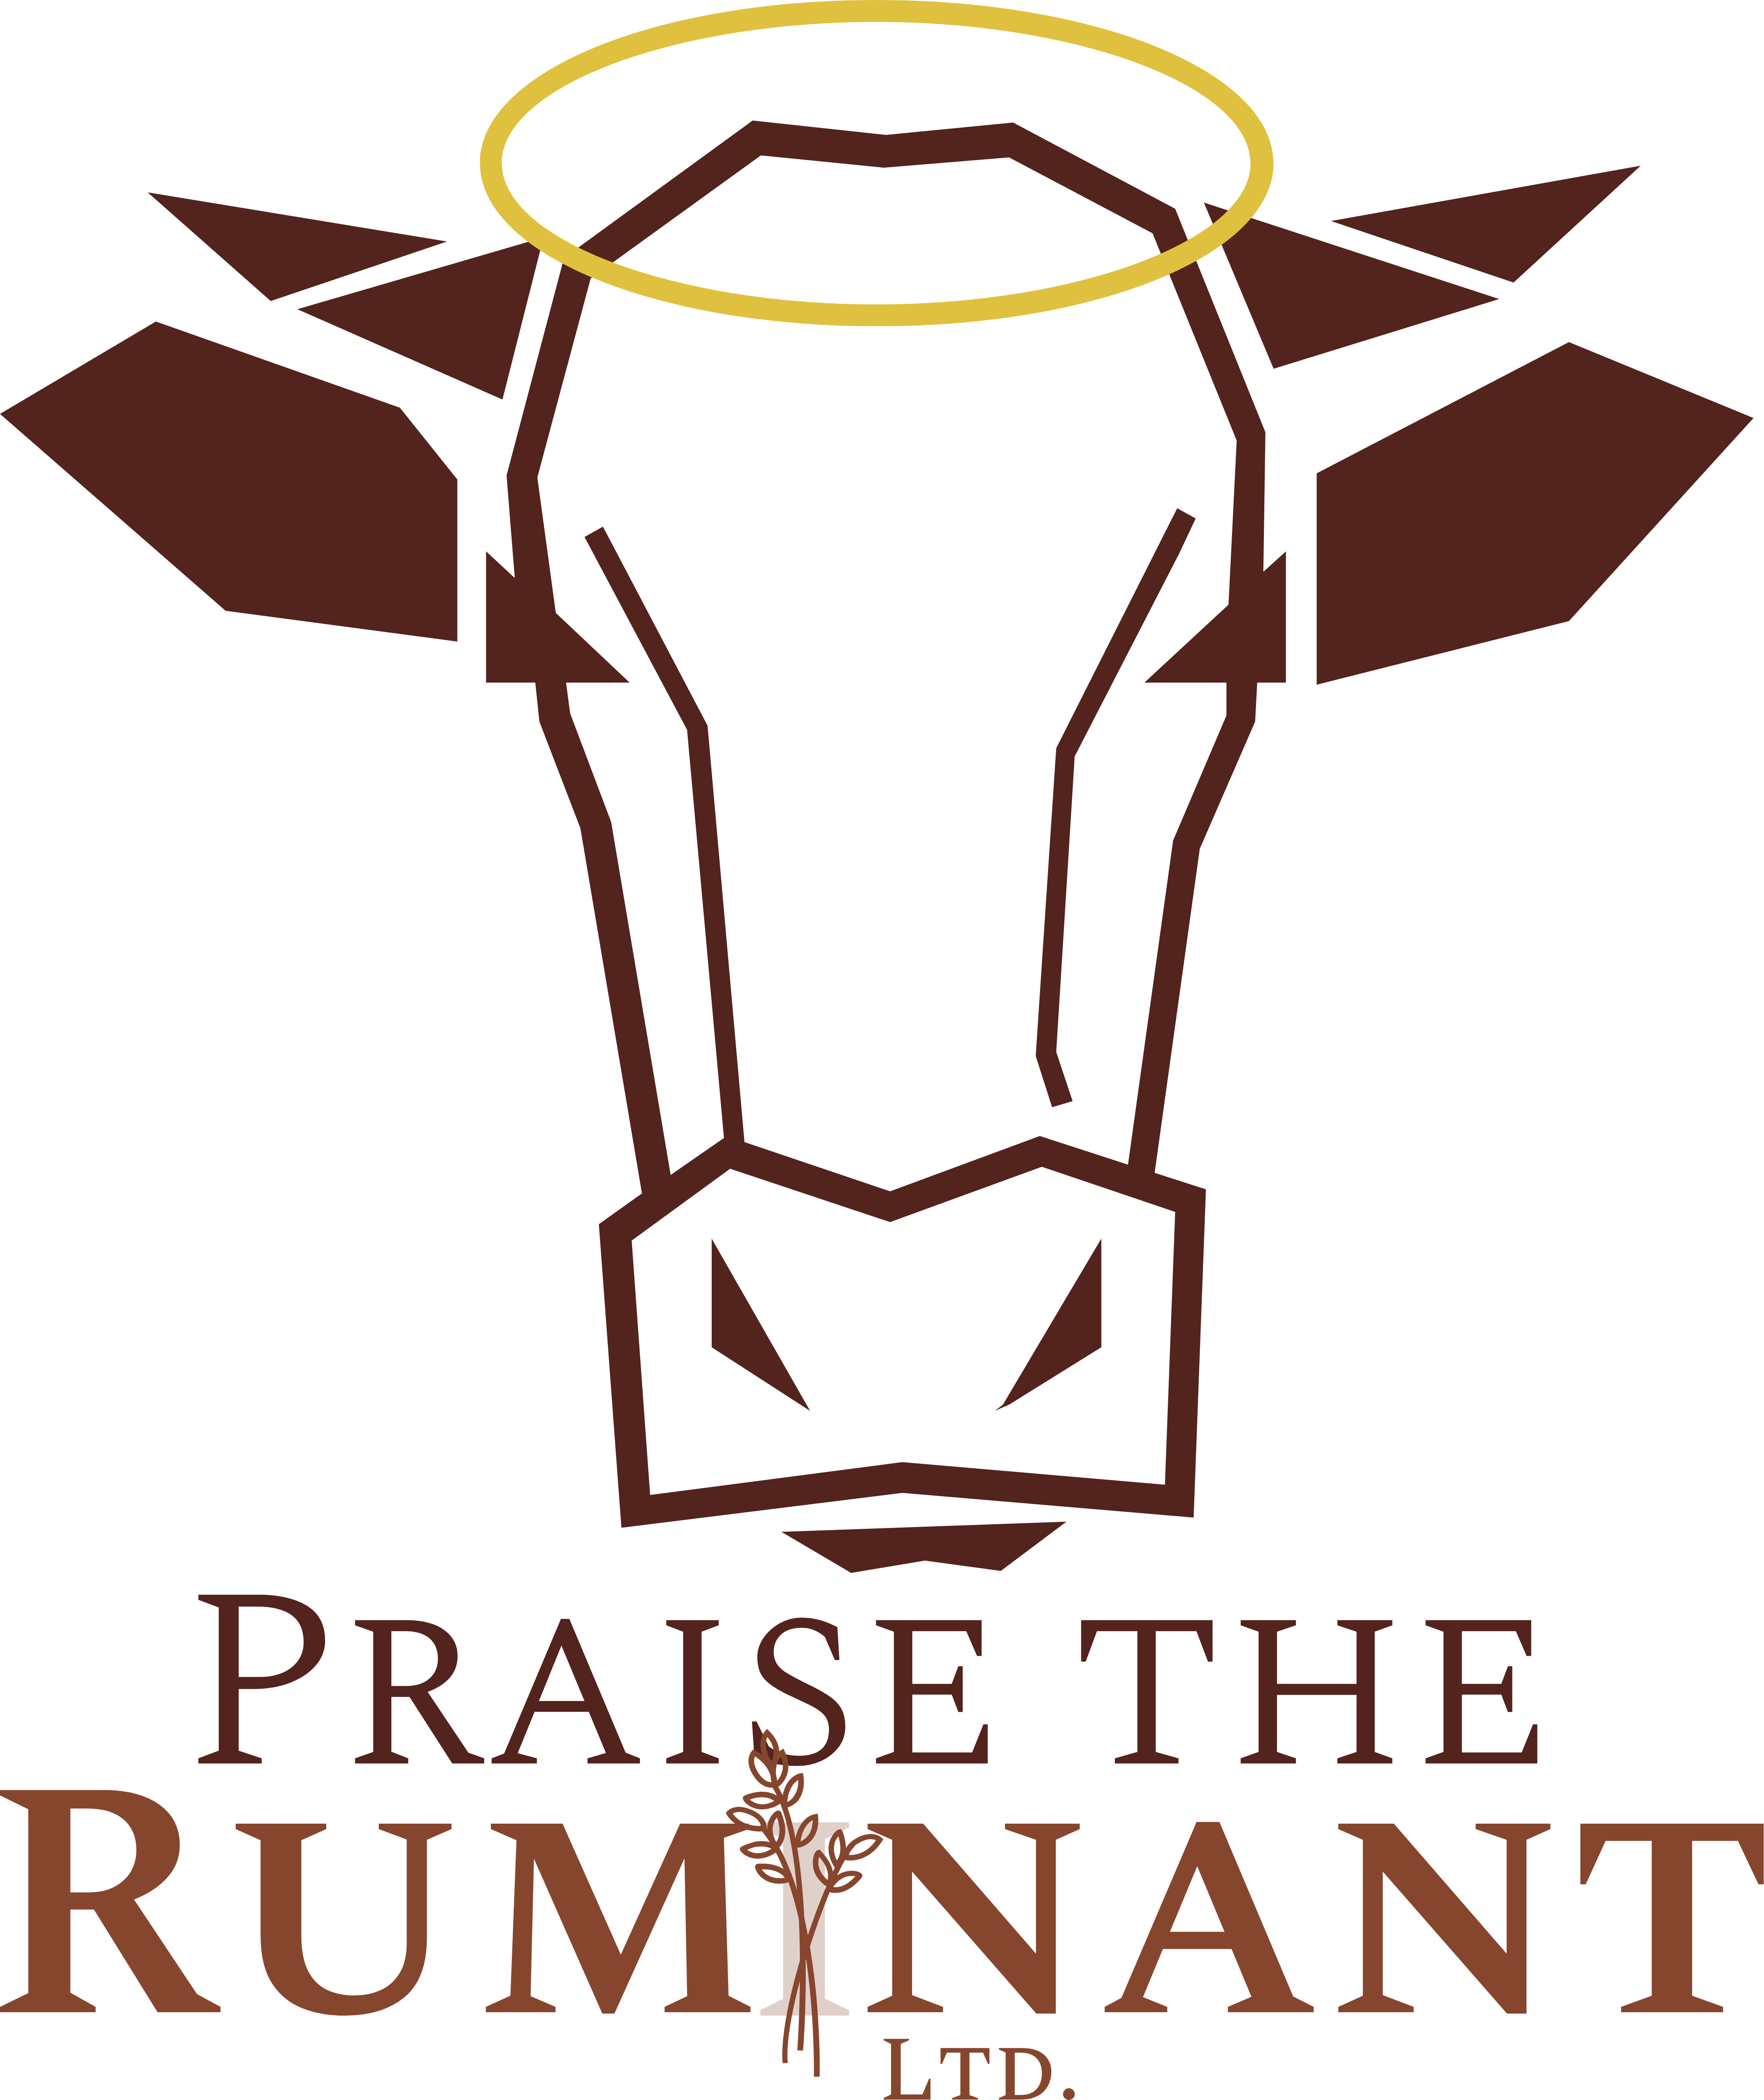 Praise the Ruminant